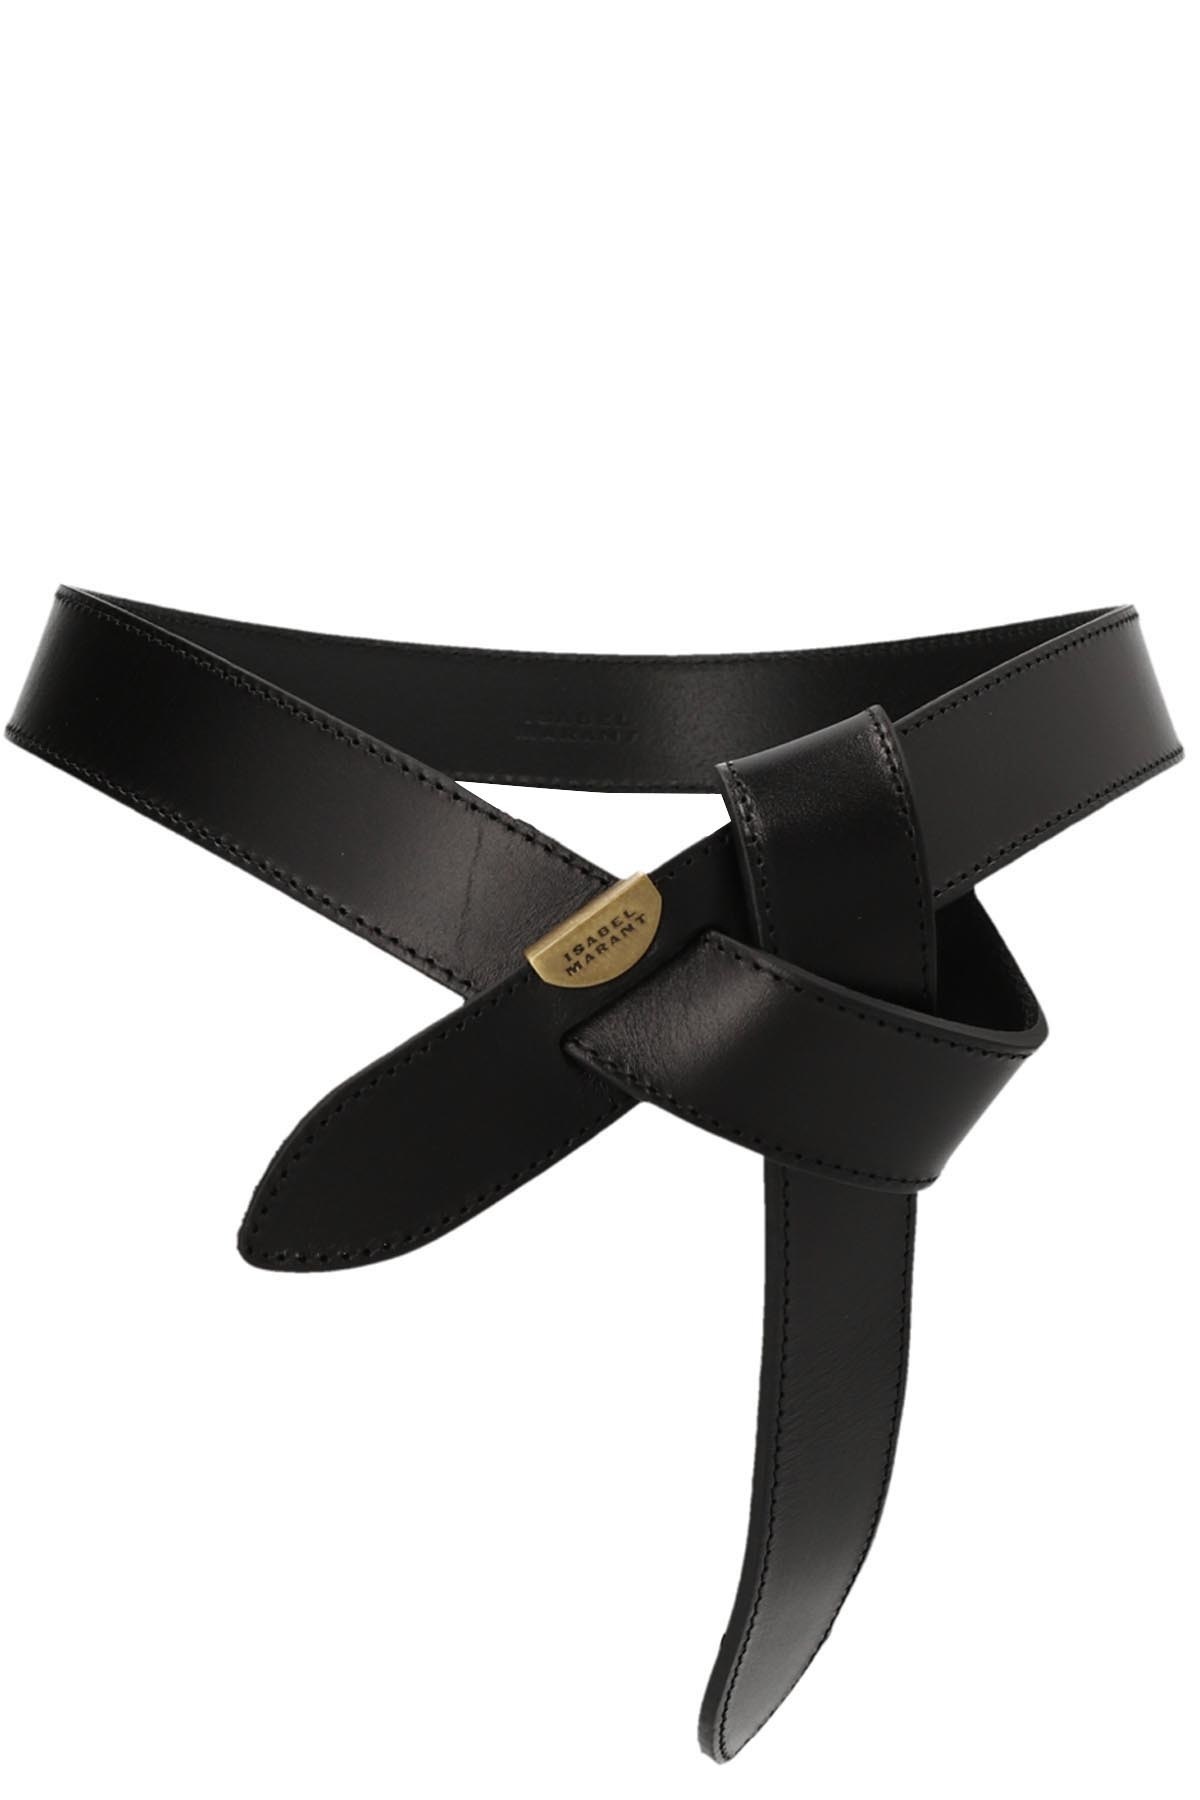 'Lecce' belt - 1